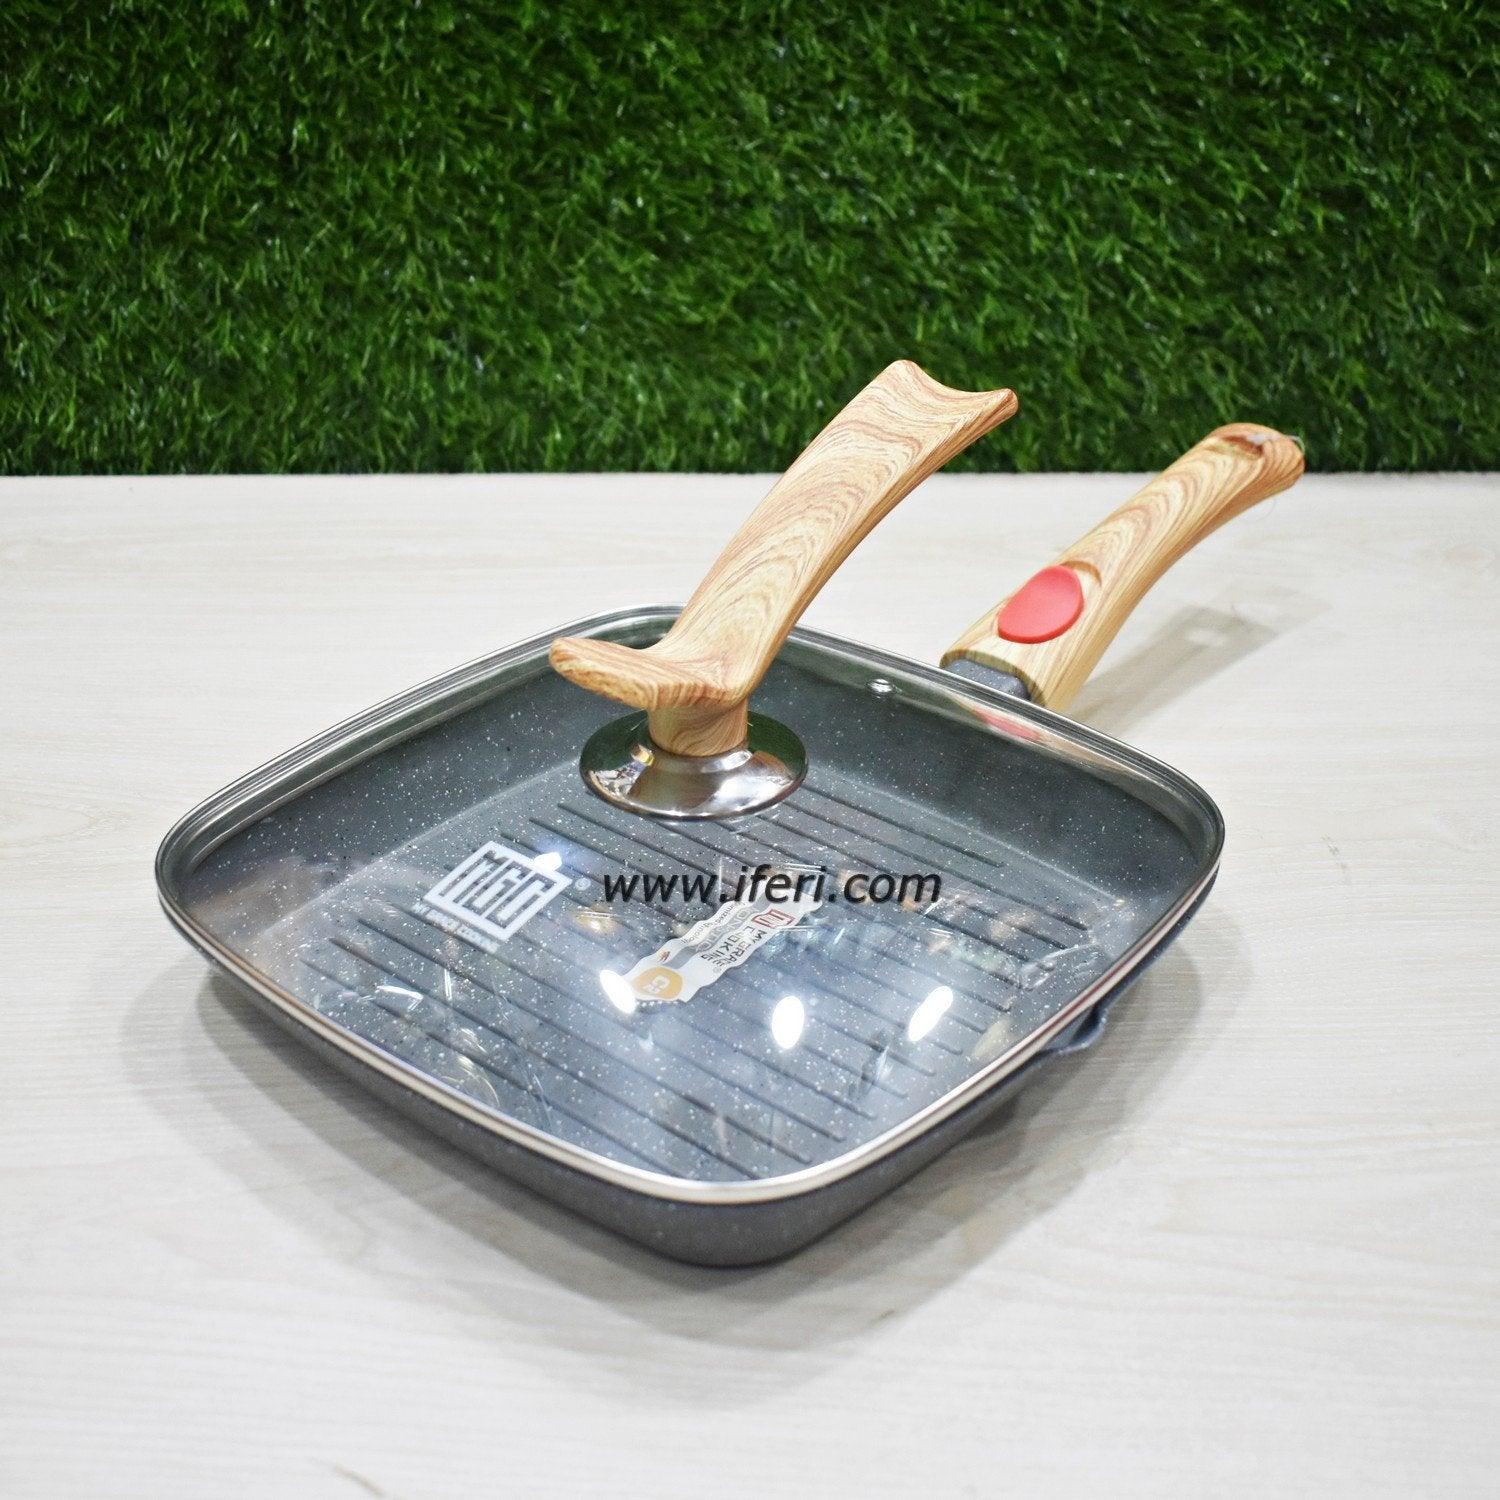 24 cm Non Stick Granite Coating Grill Fry pan With Lid RR6100 Price in Bangladesh - iferi.com